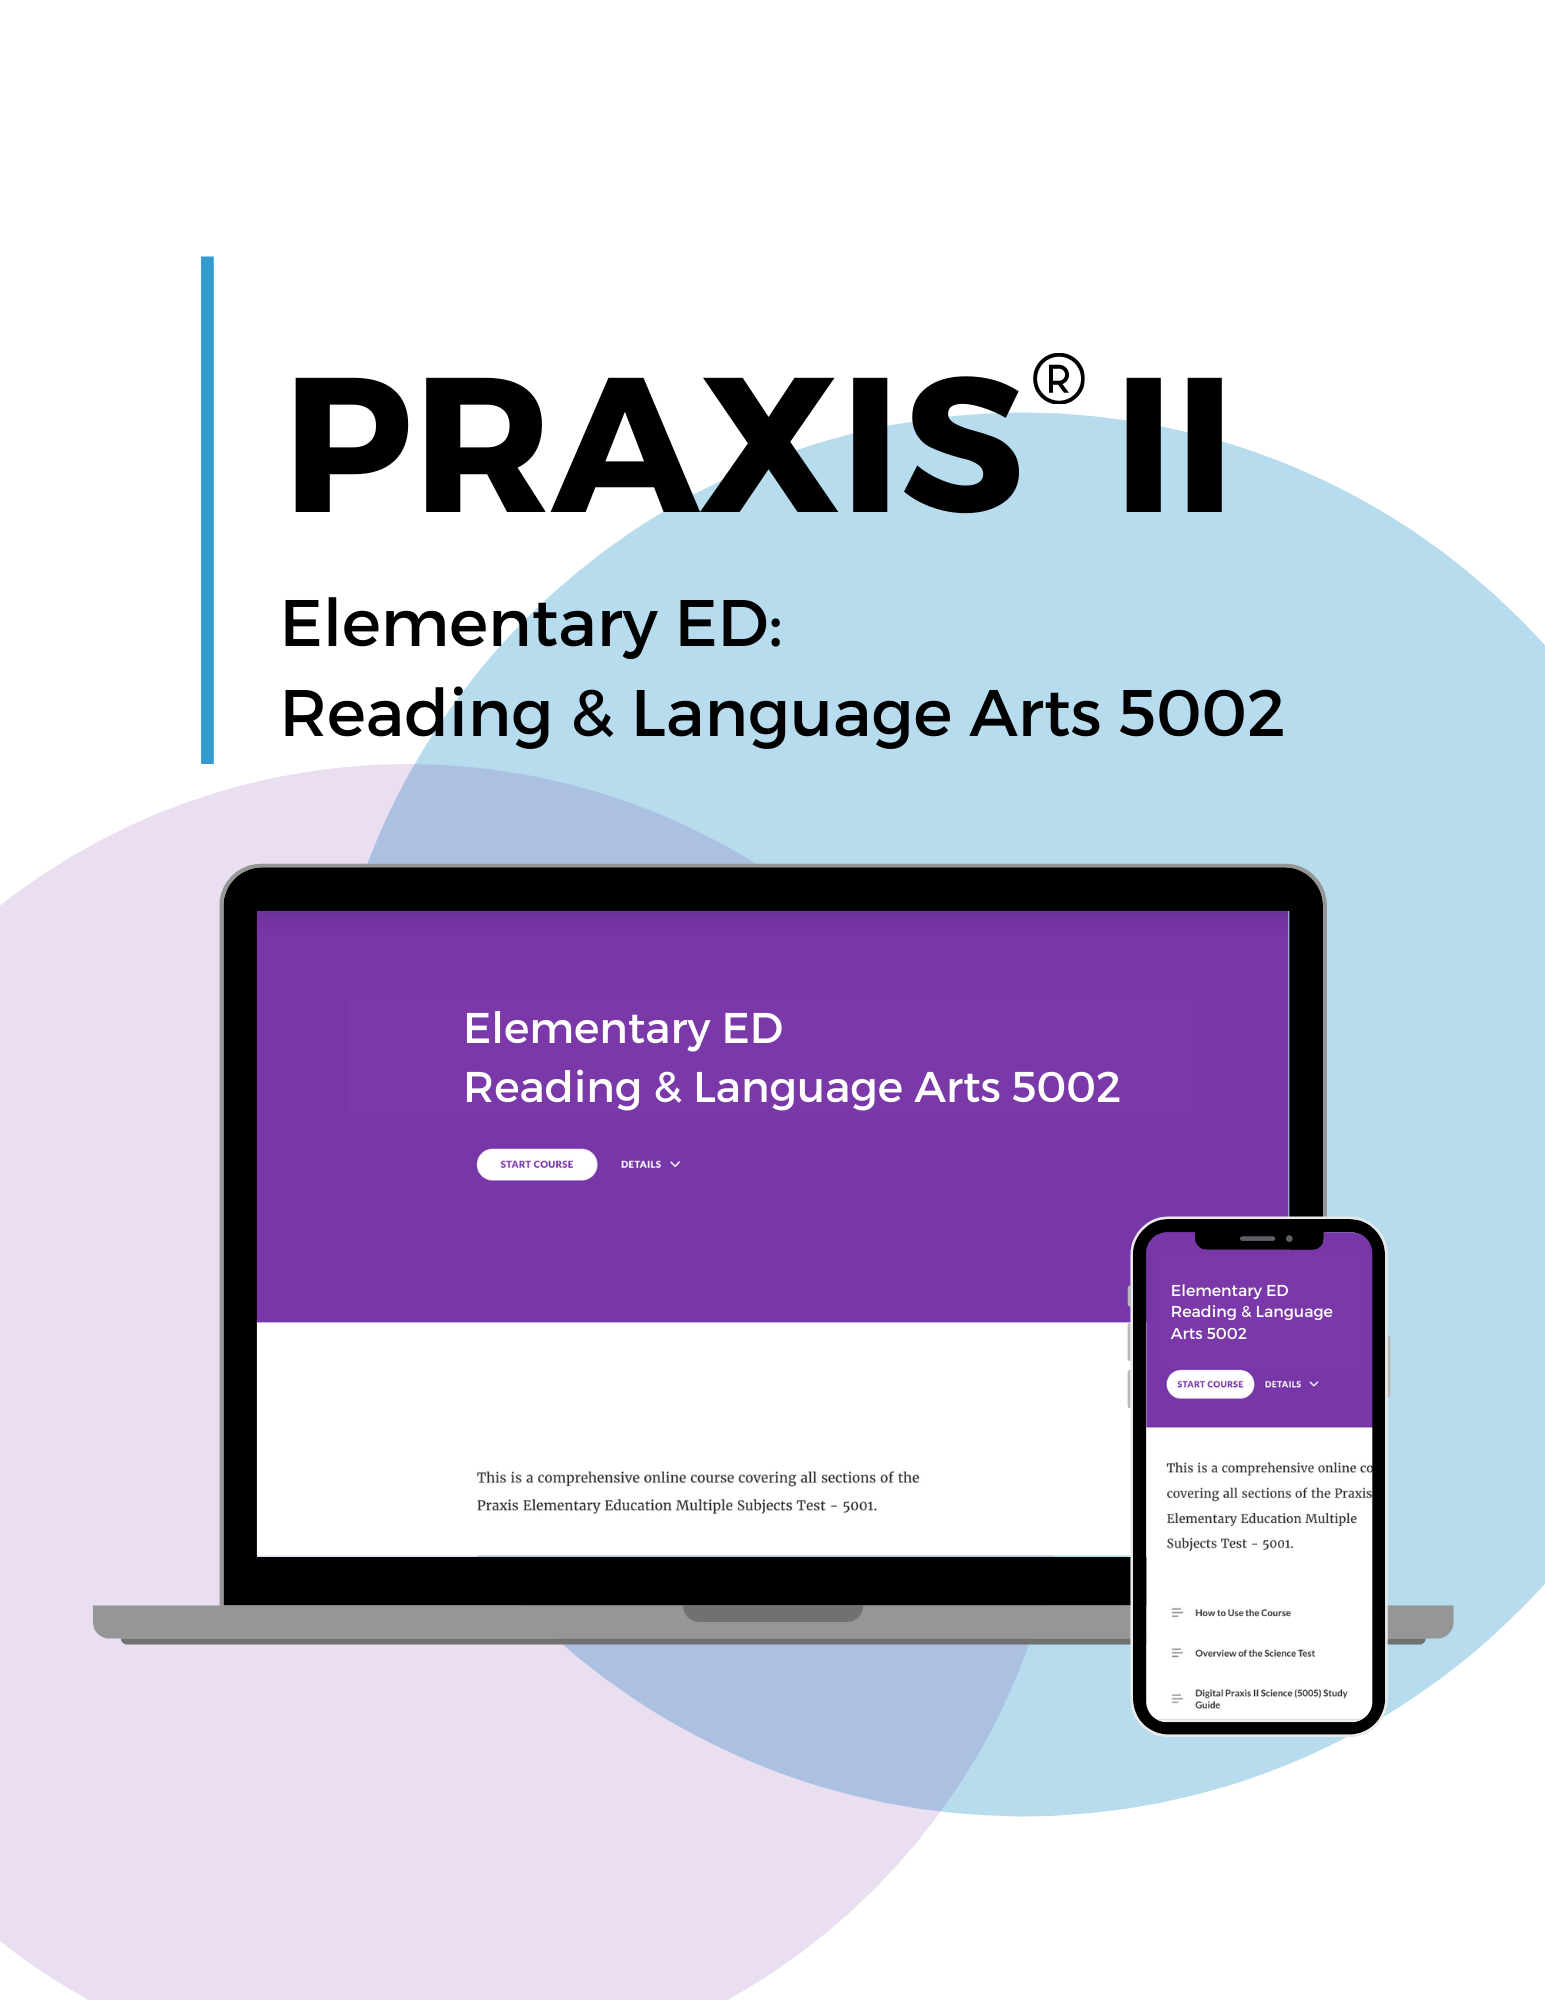 Praxis II Elementary ED: Reading & Language Arts 5002